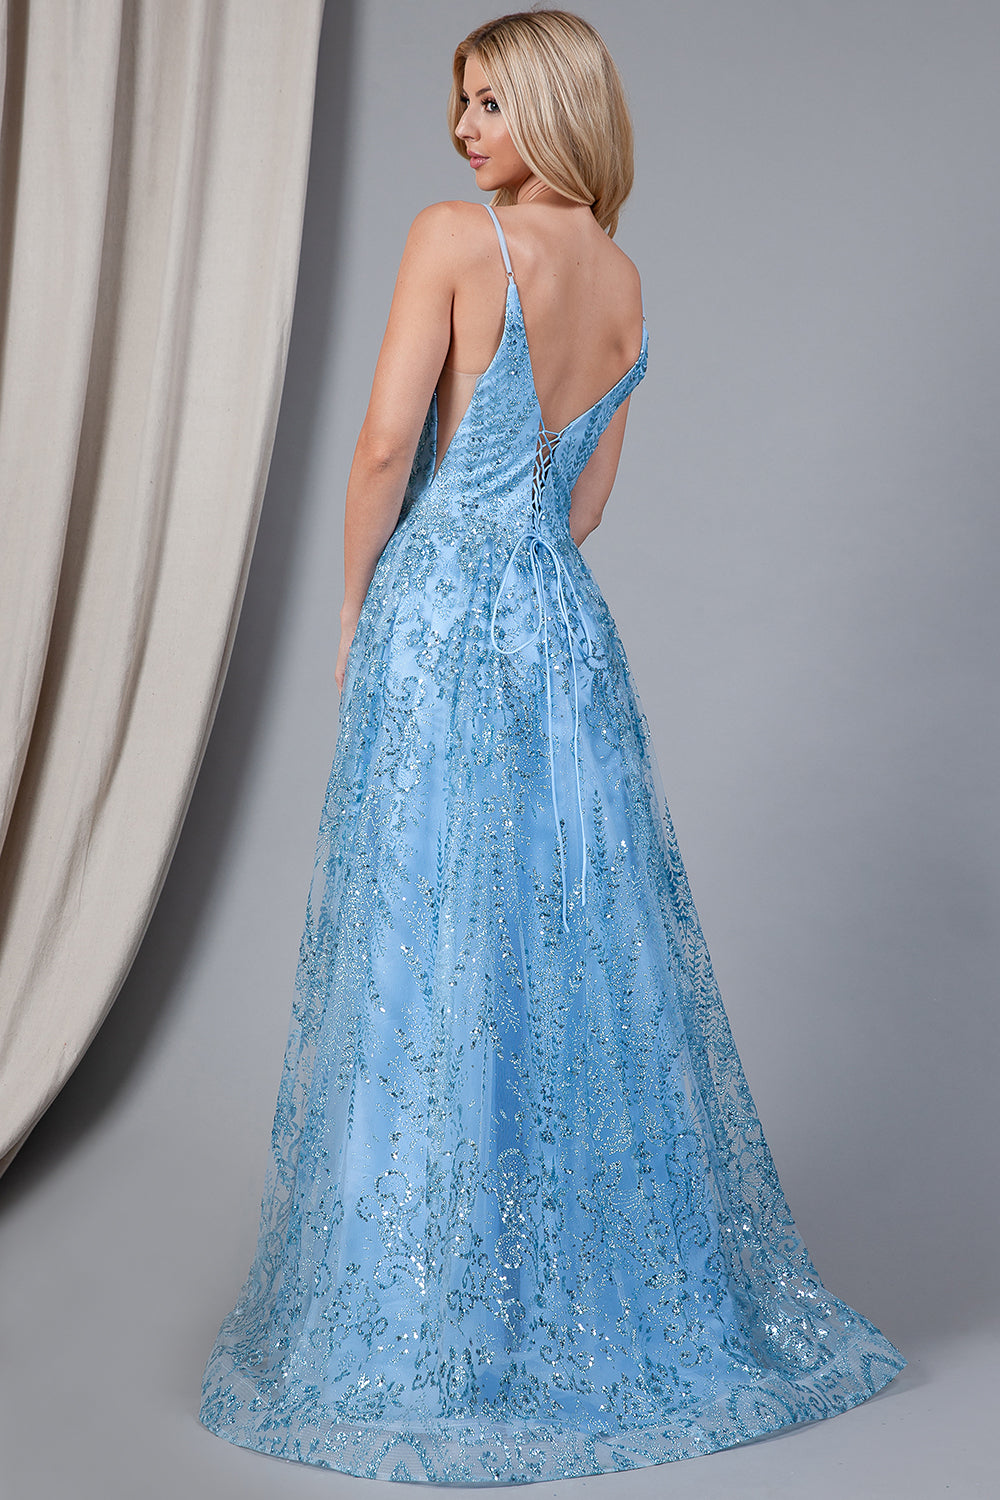 Glitter Embroidererd Lace Side Slit Open V-Back Long Prom Dress ACEL010-2